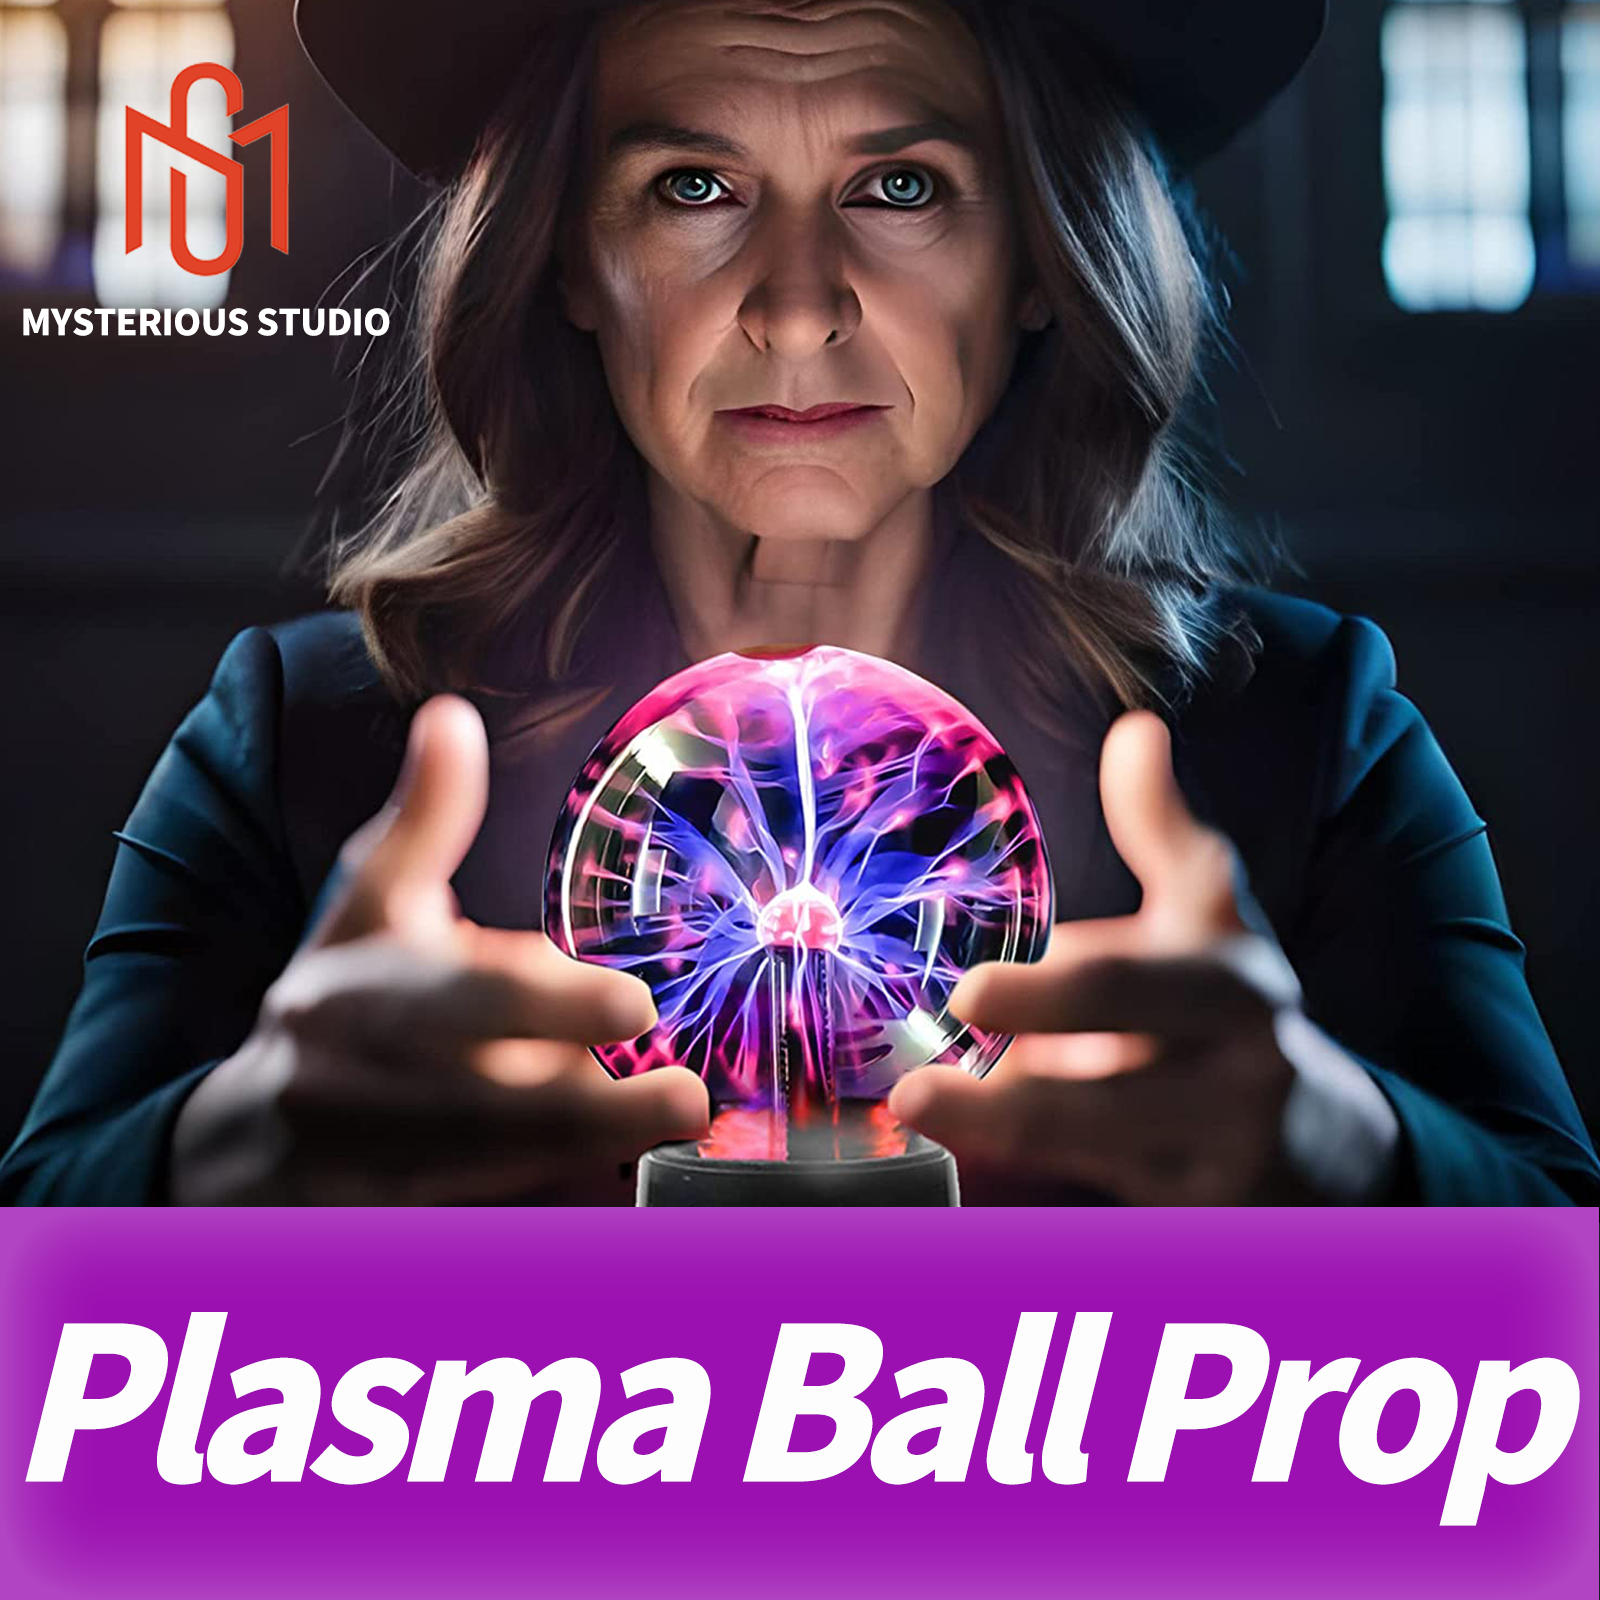 Mysterious Studio Secret Room Escape Game Mechanism Punts Polsma Electronic Plasma Ball Static Luminous Touch